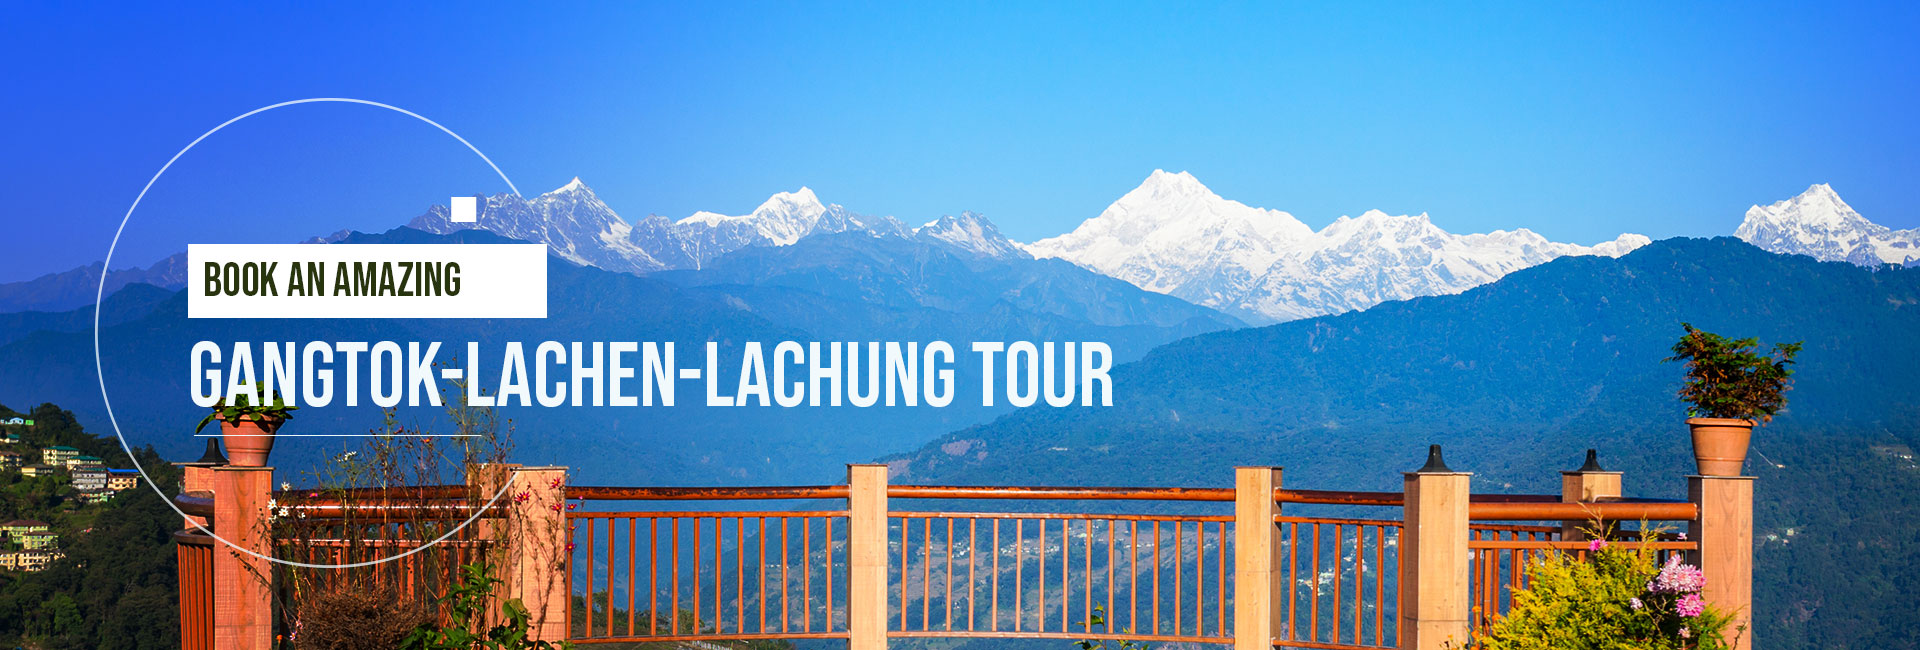 Gangtok Lachen Lachung Tour - Be An Explorer